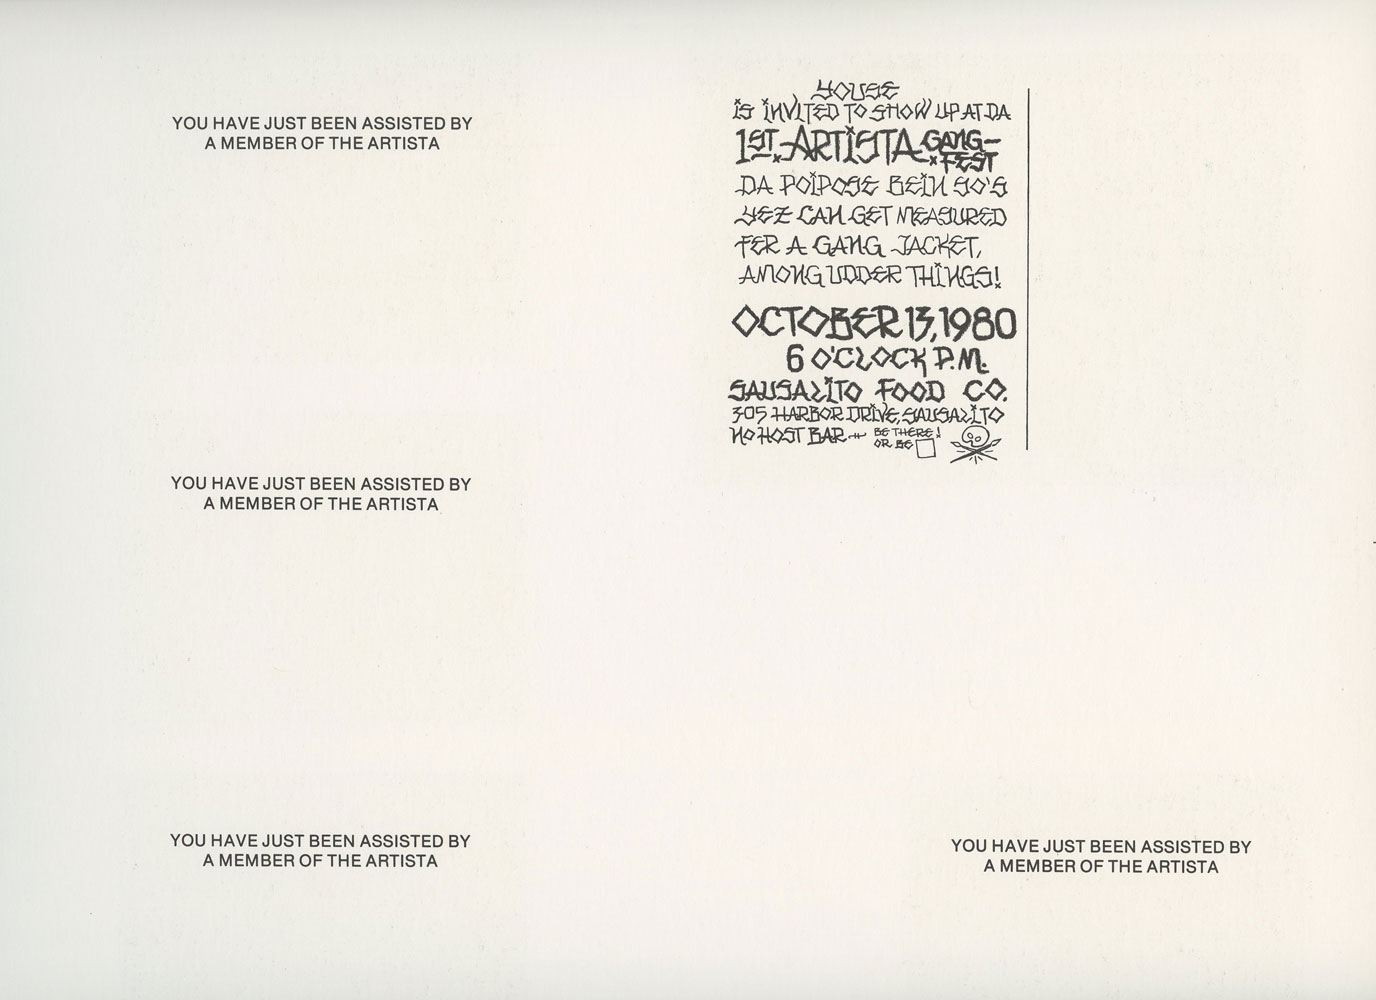 Alton Kelley Design Proof 1st Arista Gang Fest 1980 Invitation